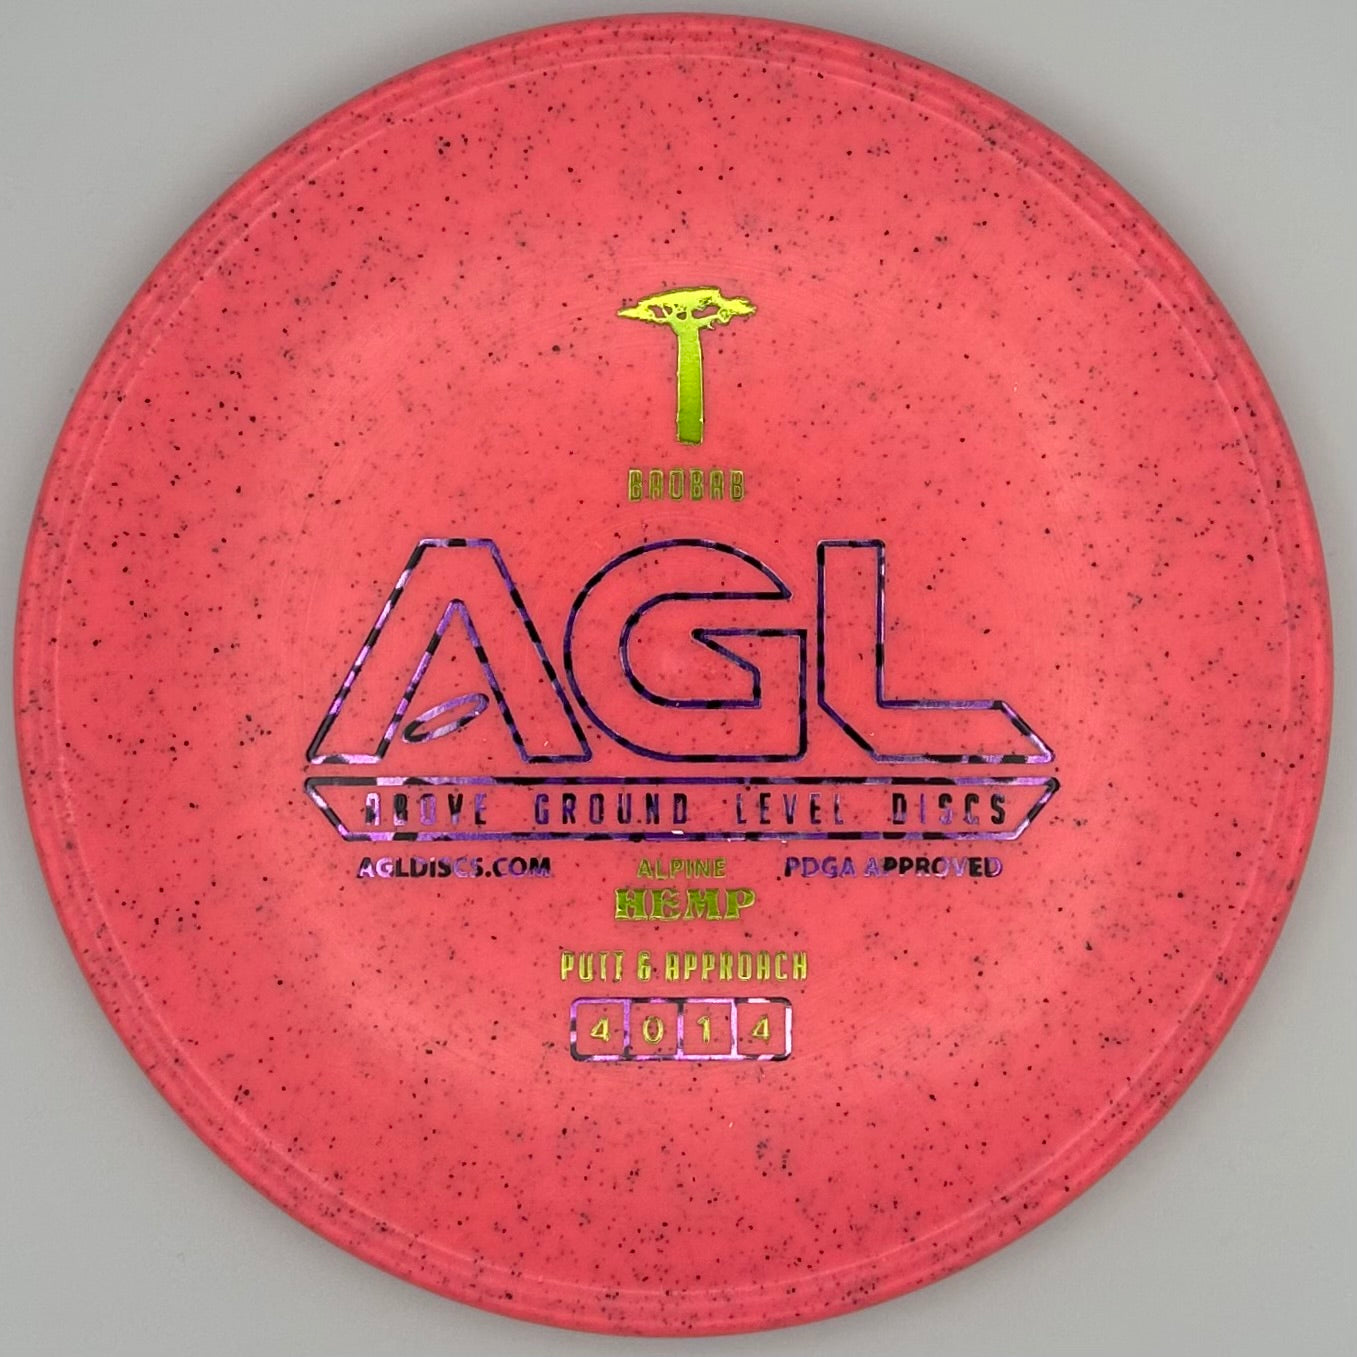 AGL Discs - Strawberry Pink Alpine Hemp Baobab (AGL Bar Stamp)